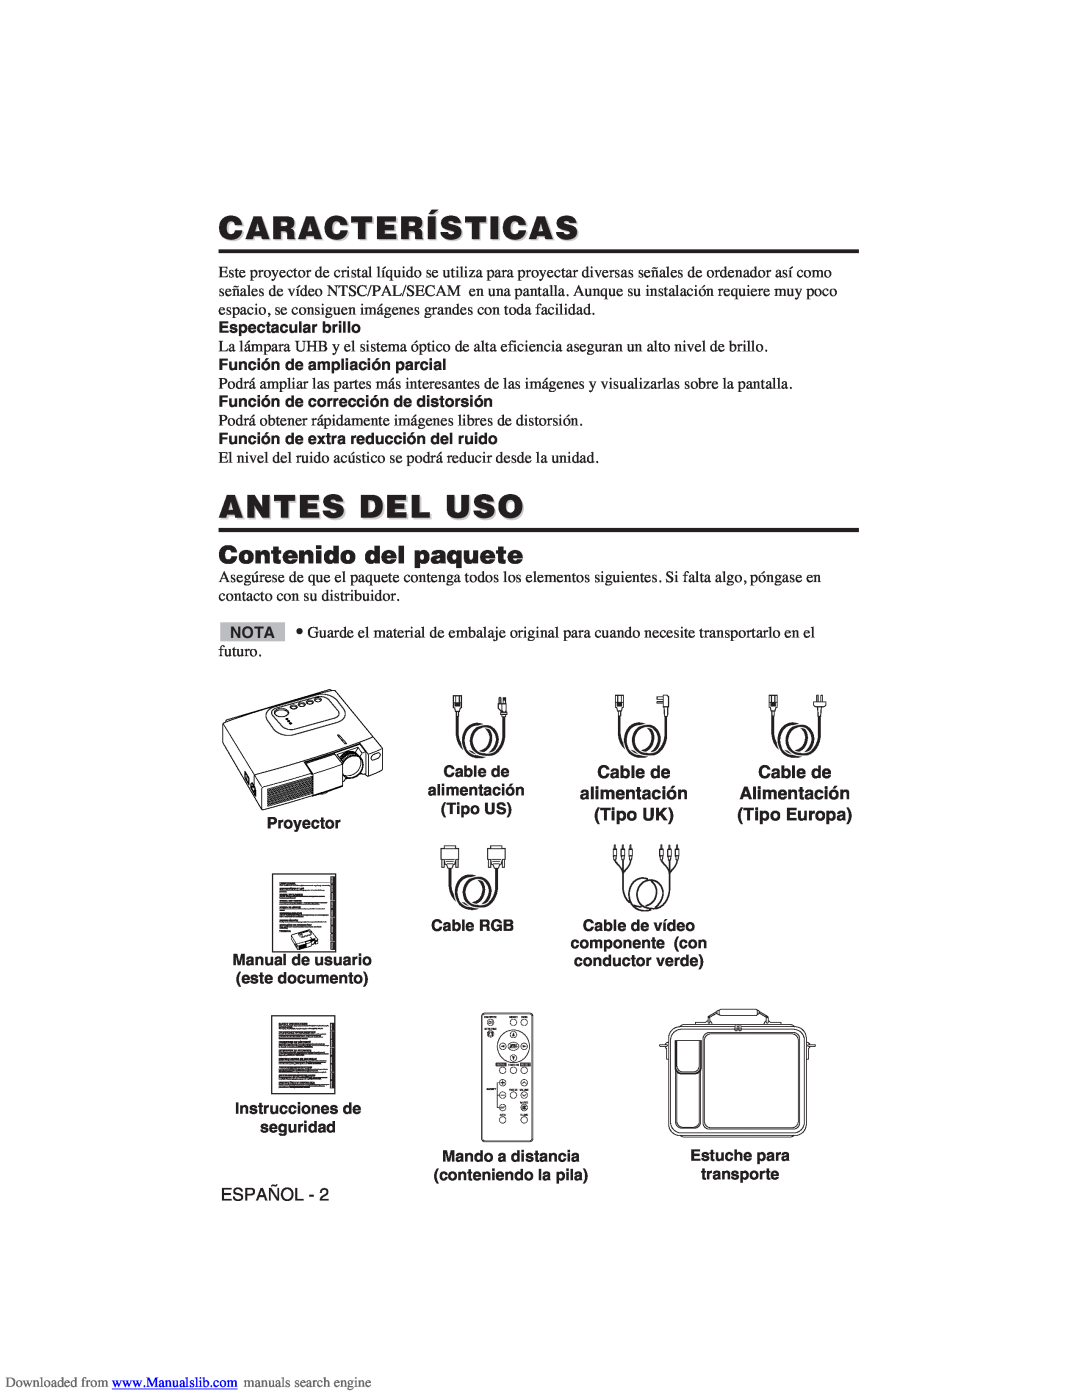 Hitachi CP-X275W user manual Características, Antes Del Uso, Contenido del paquete, Tipo UK, Tipo Europa 